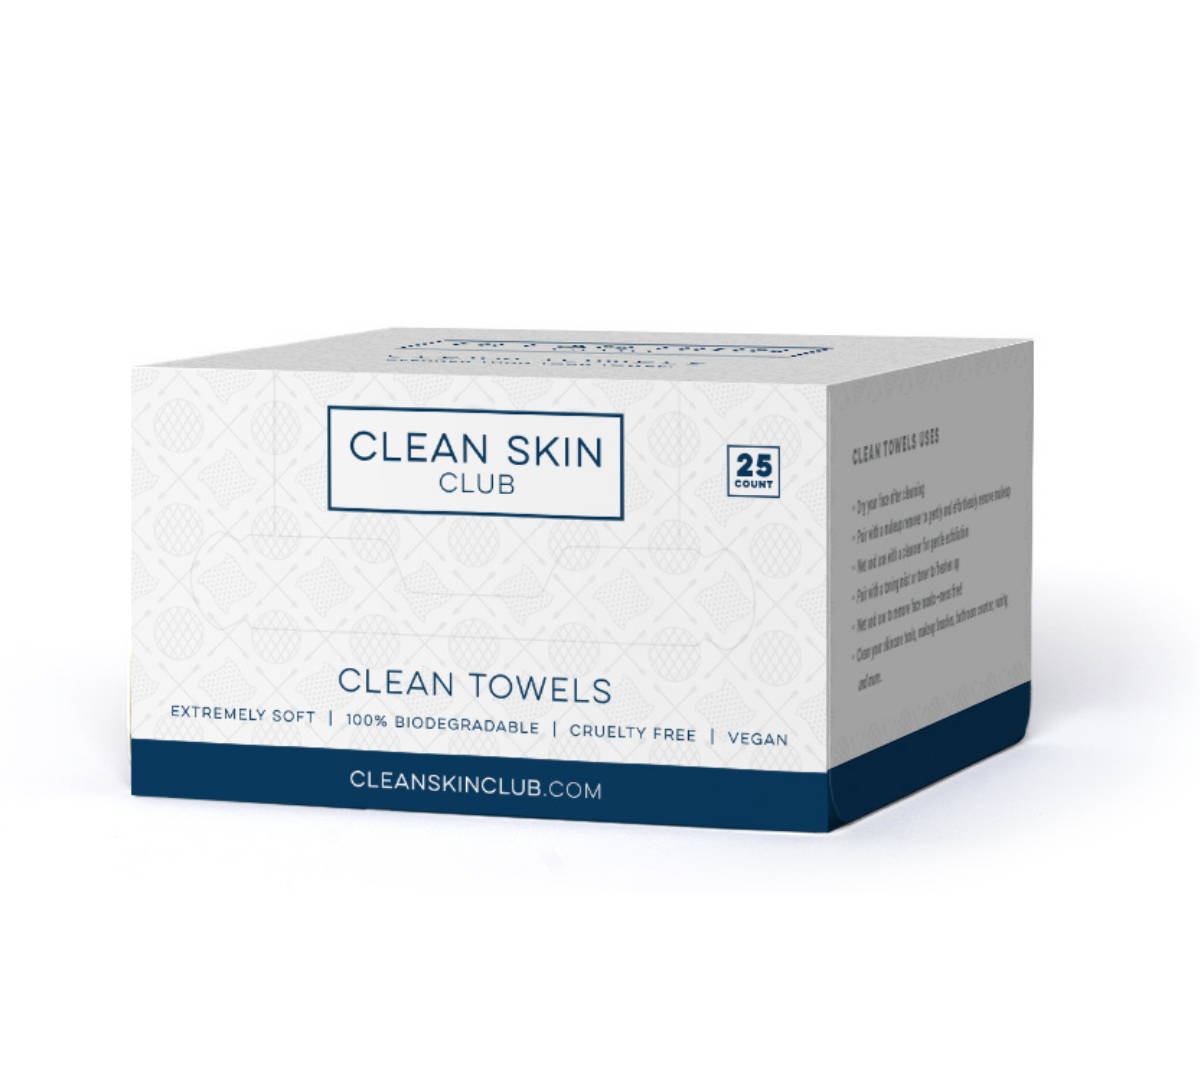 Clean Towels - 25 Count – Clean Skin Club